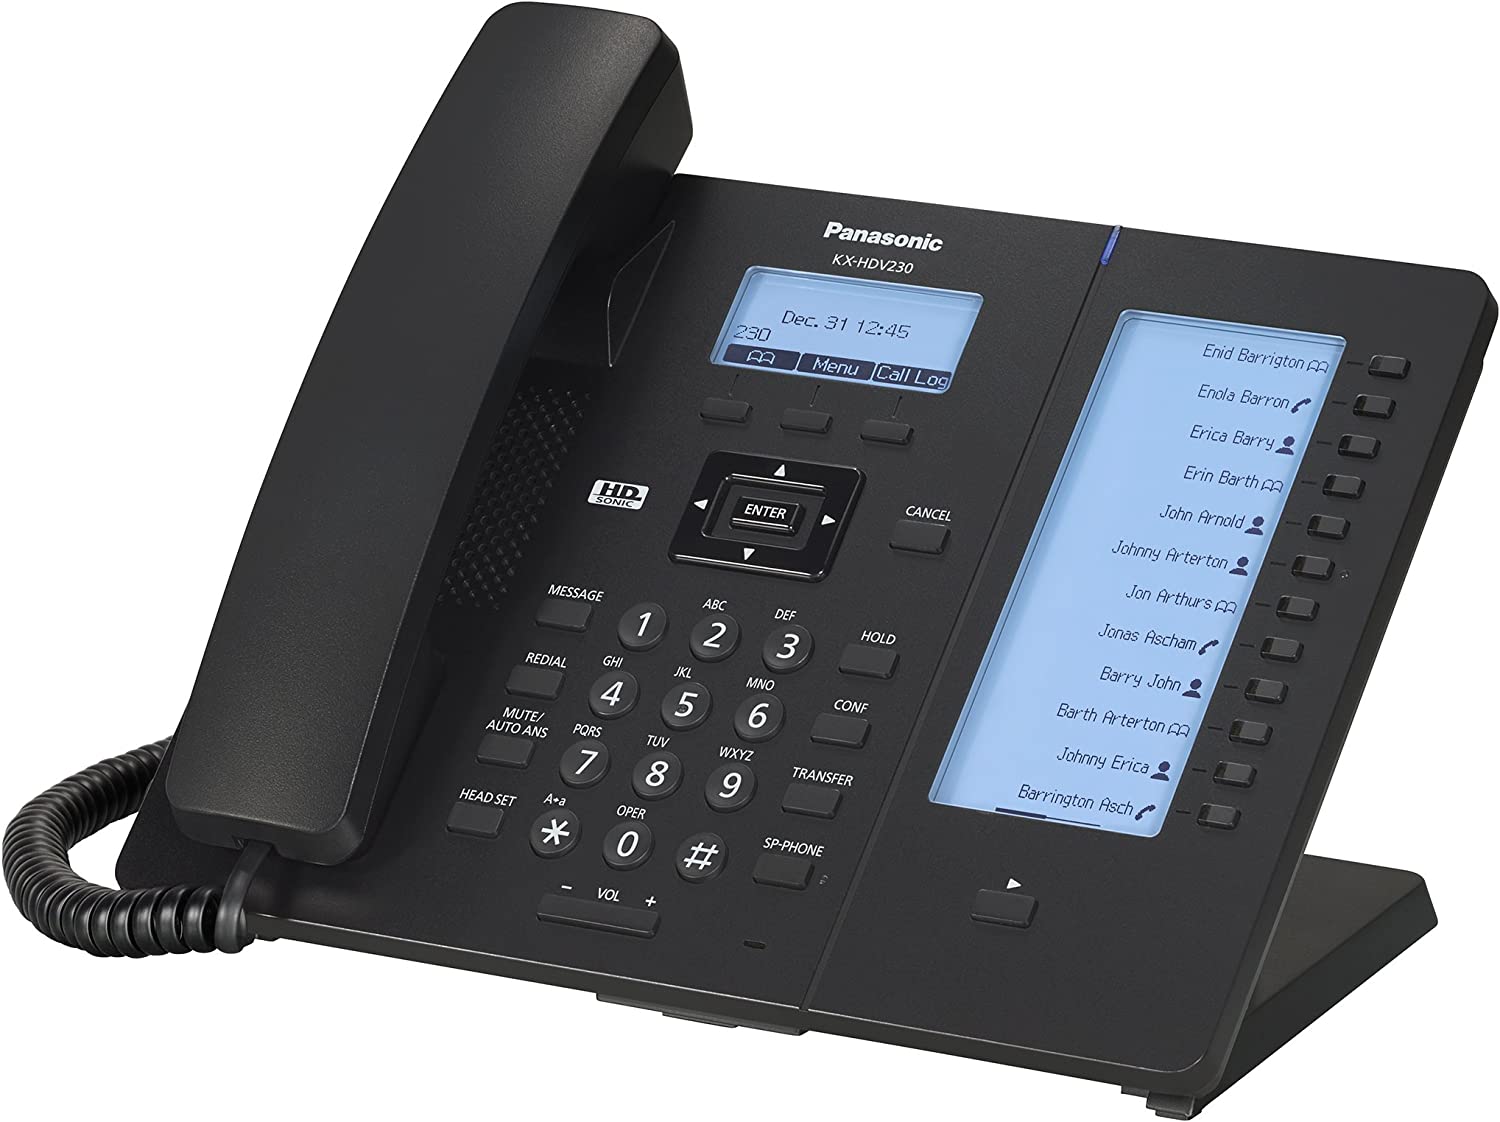 Panasonic Executive SIP Phone (KX-HDV230B) Refurb